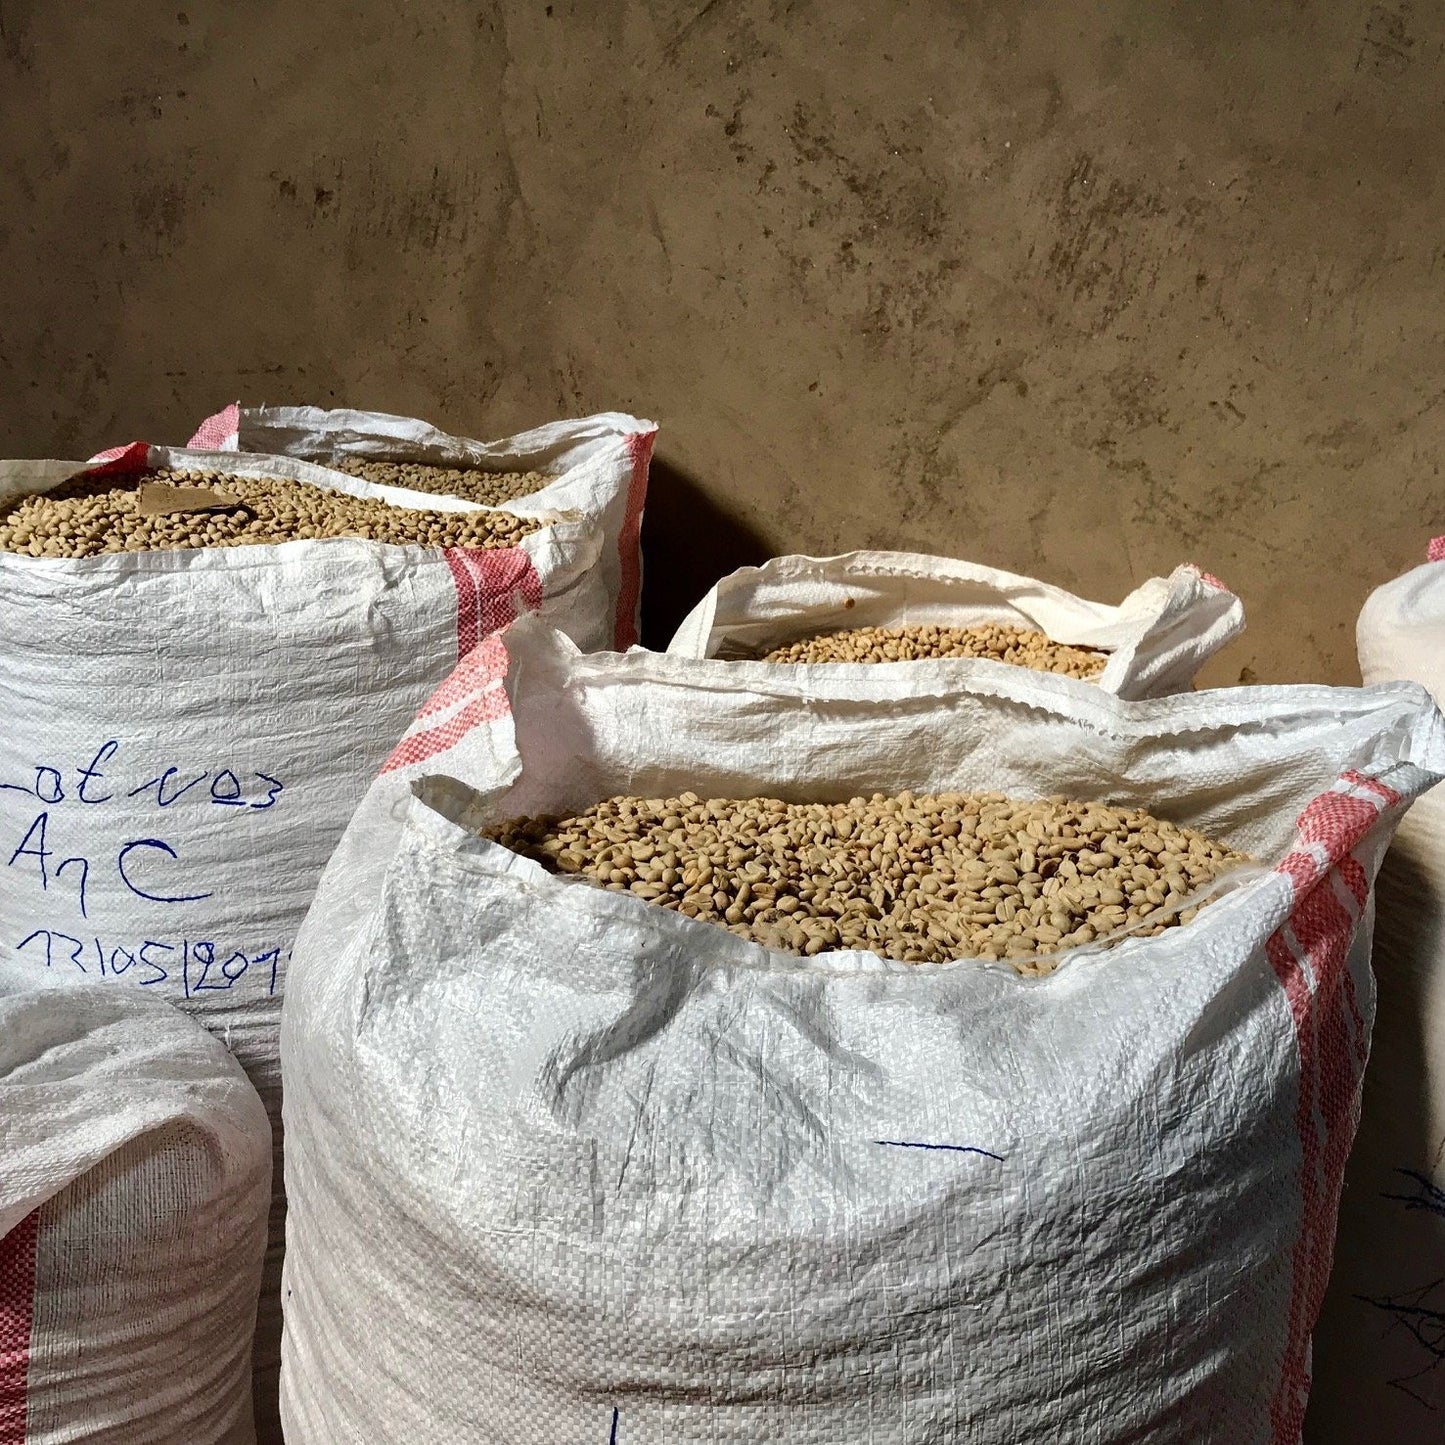 Washed coffee beans at Mahembe in Rwanda